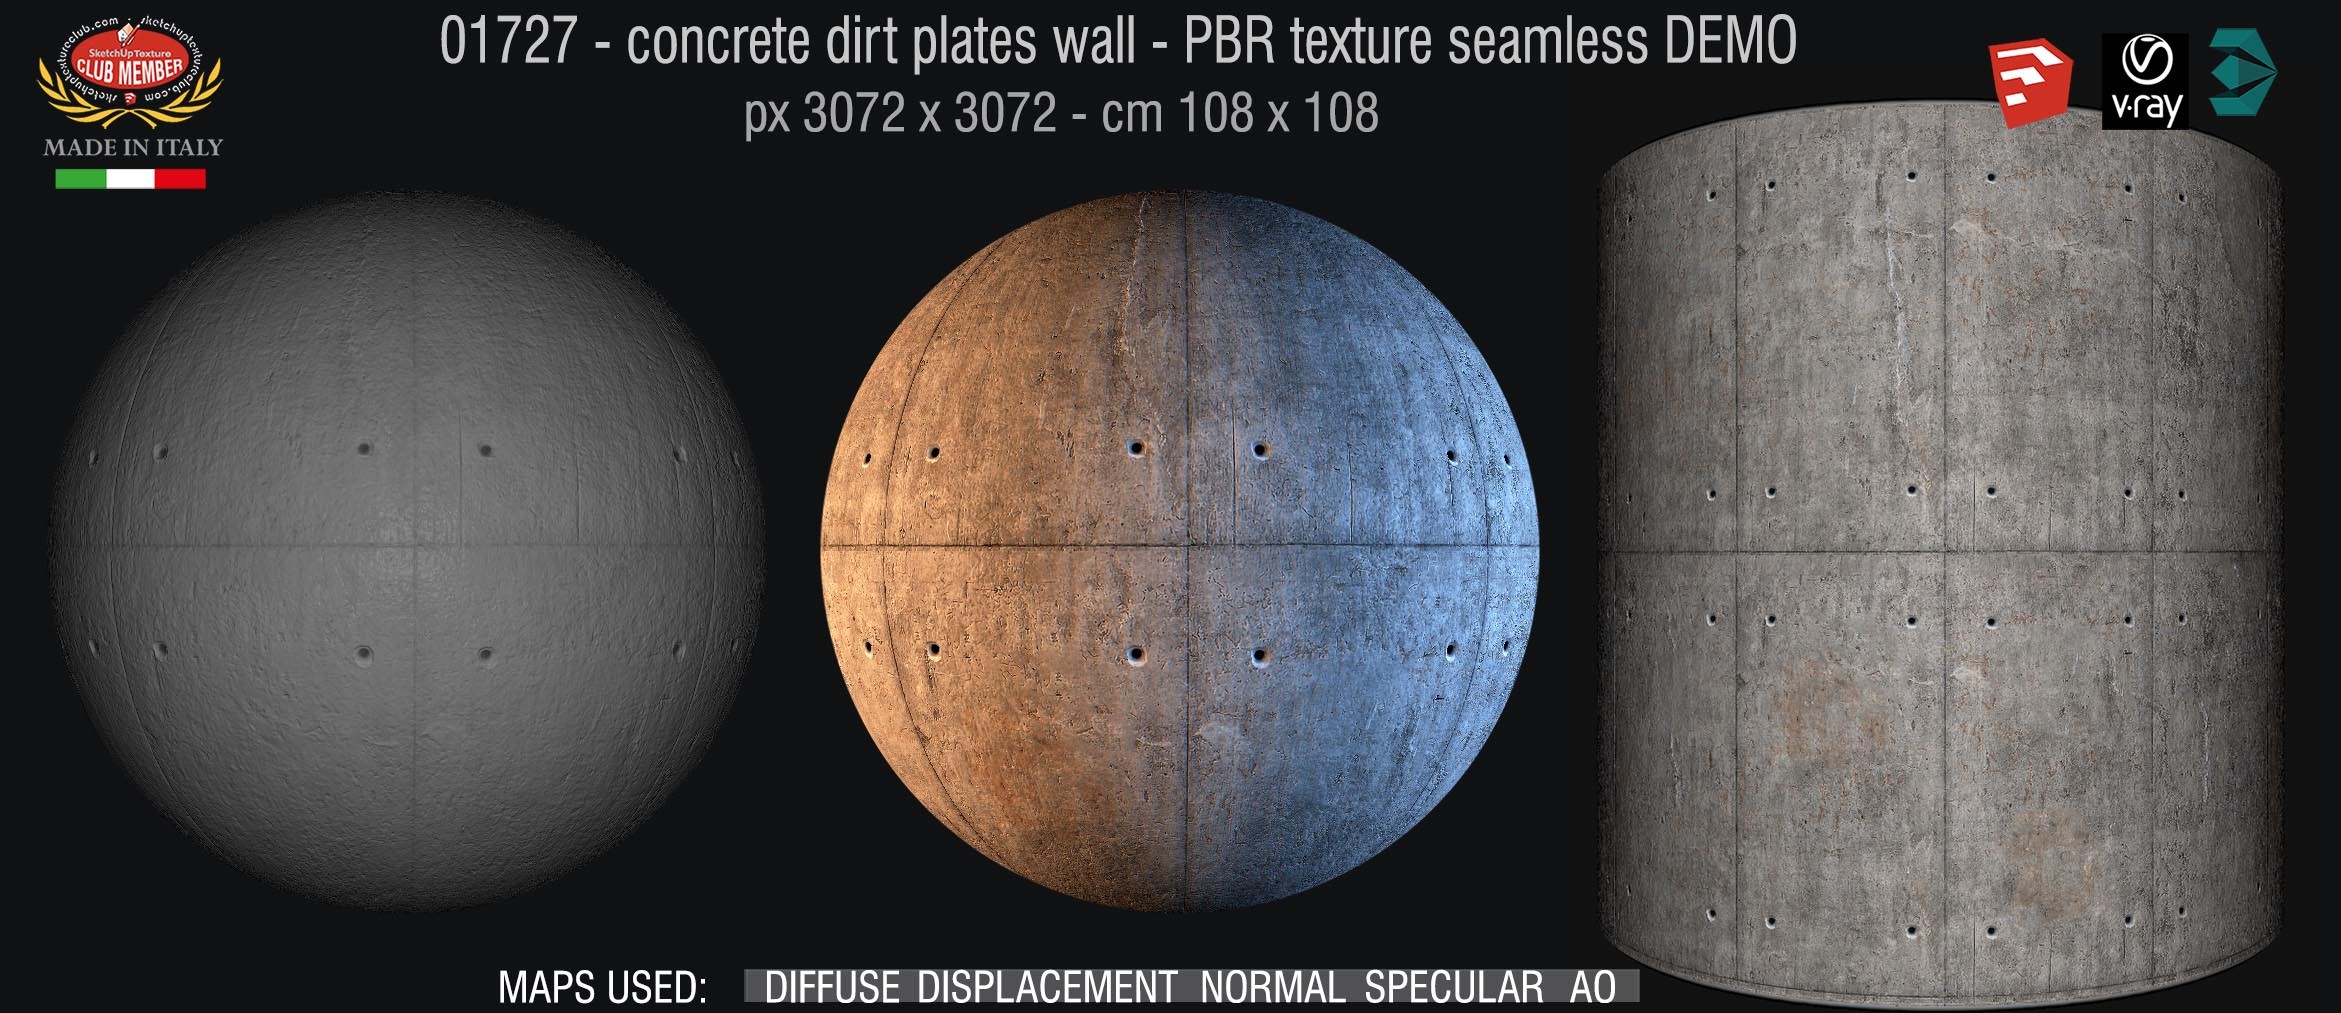 01727 concrete dirt plates wall PBR texture seamless DEMO